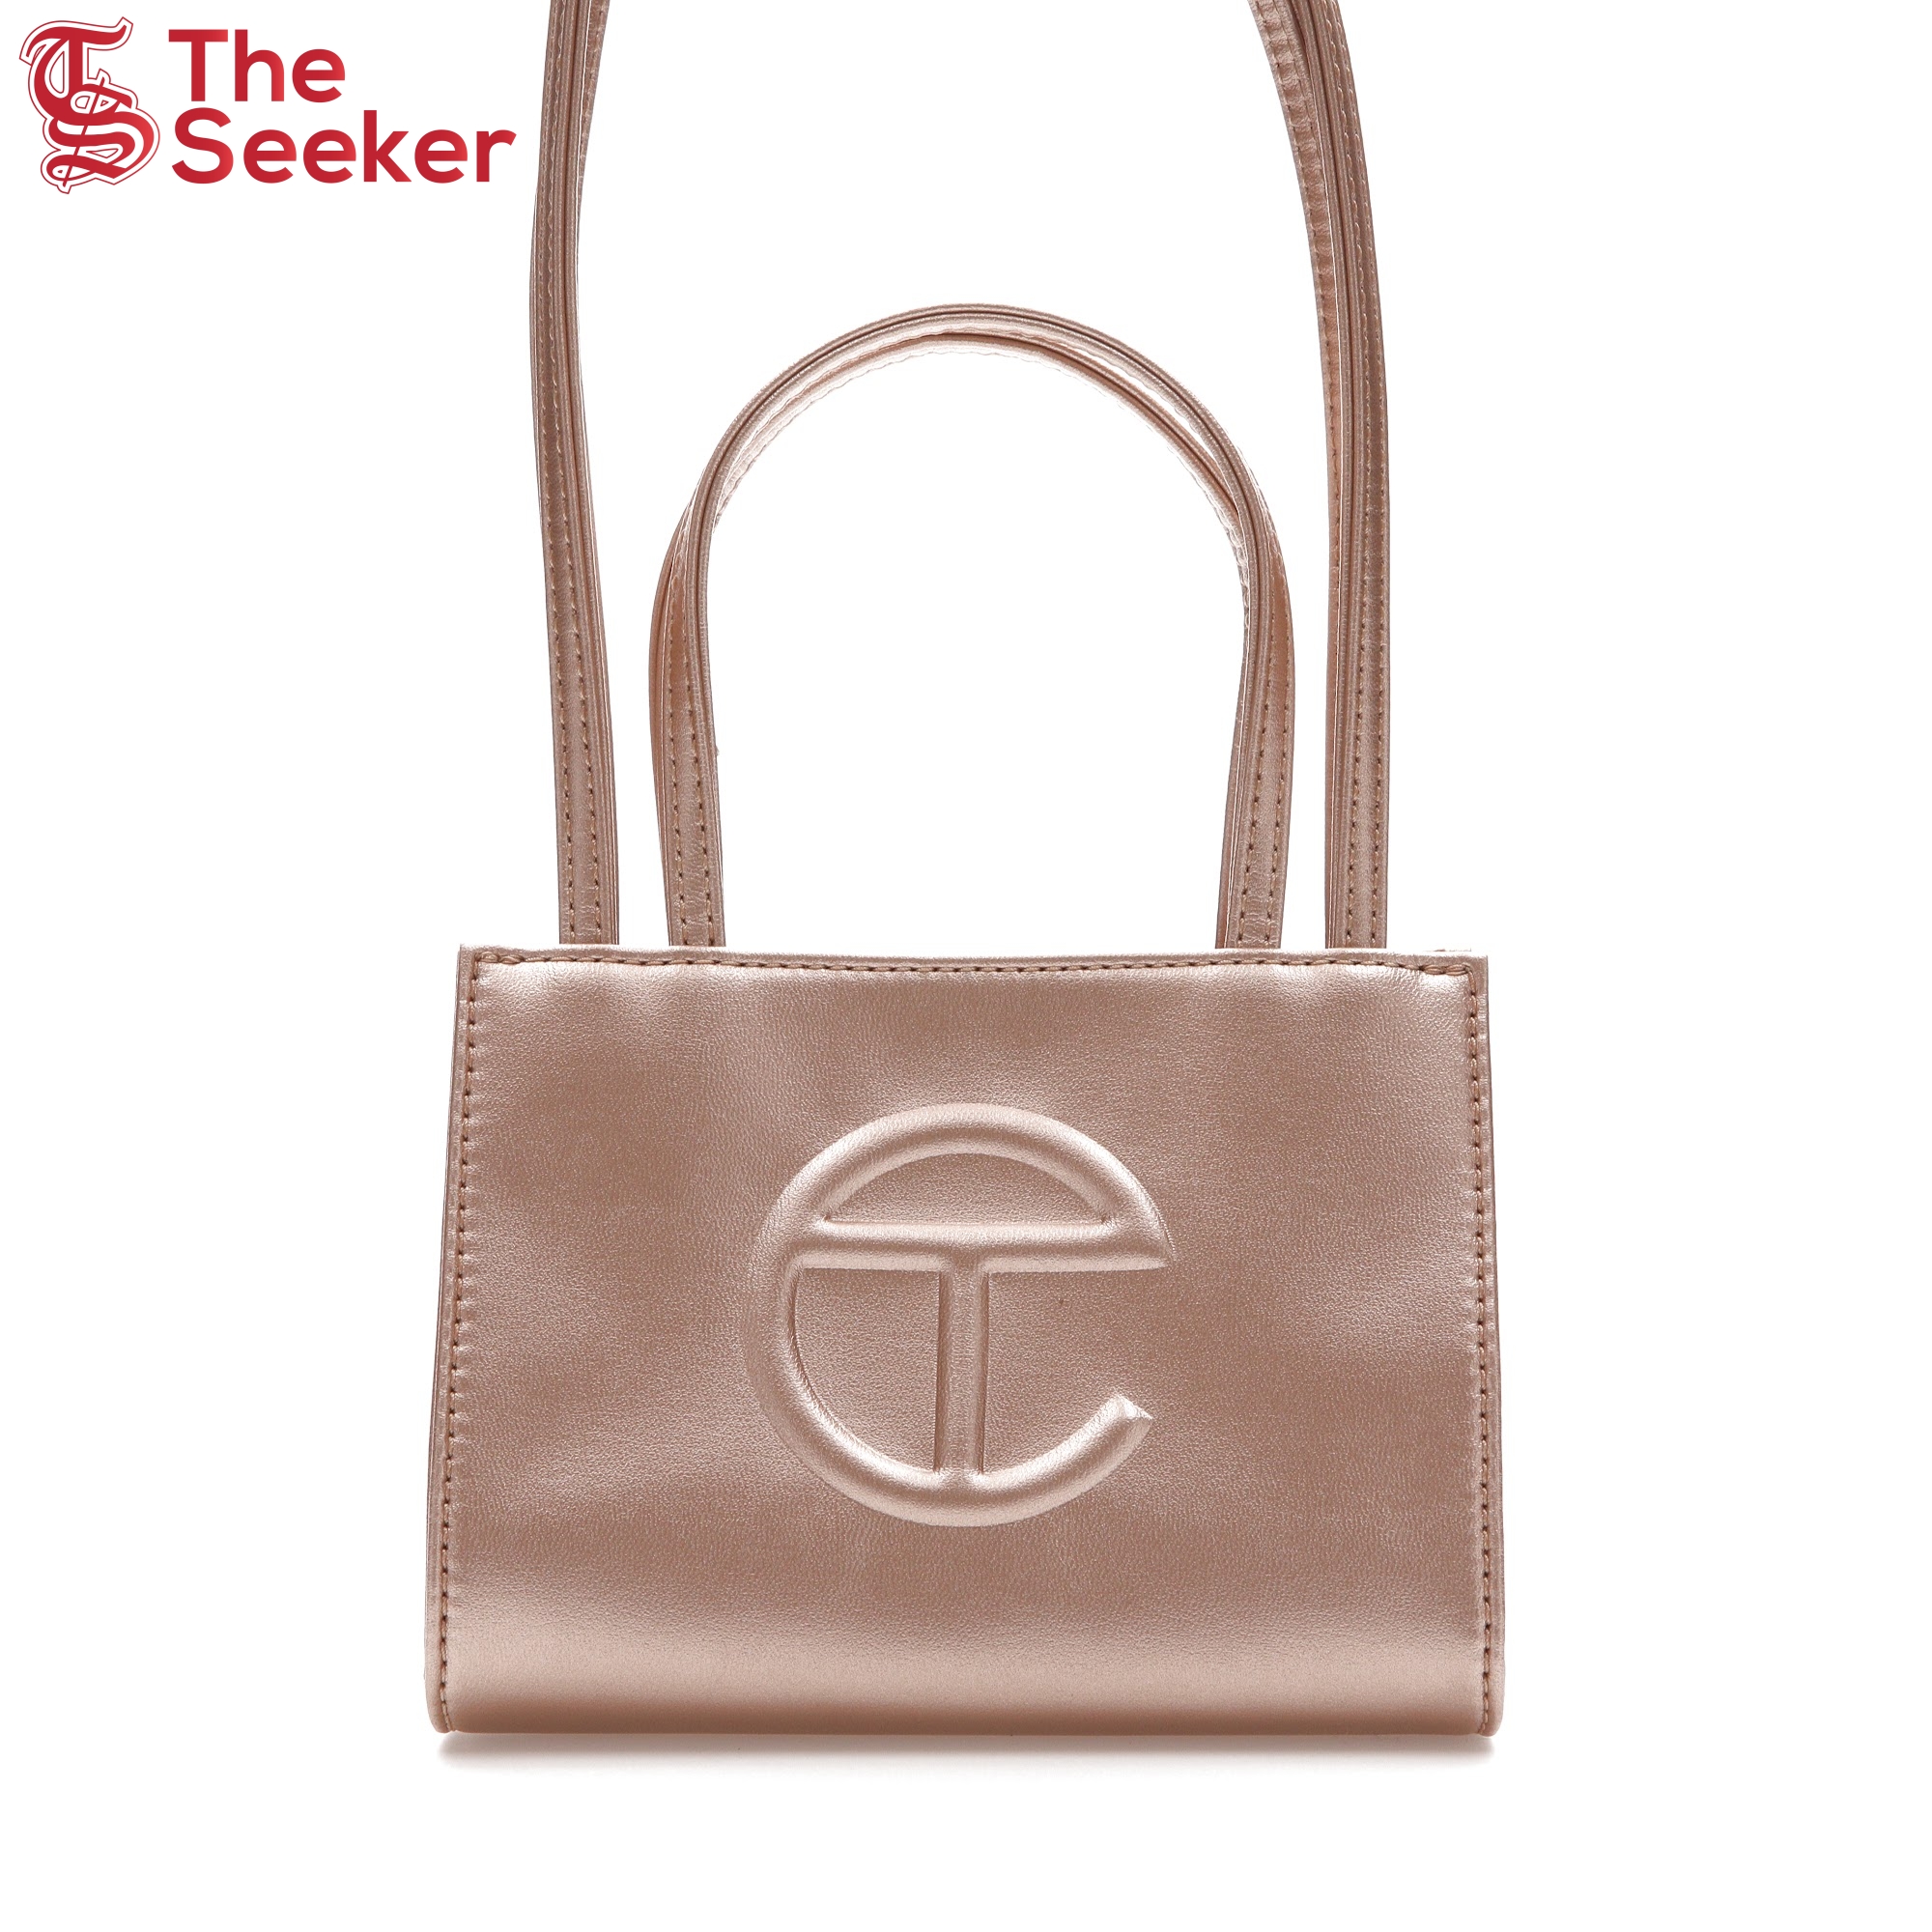 Telfar Shopping Bag Small Copper